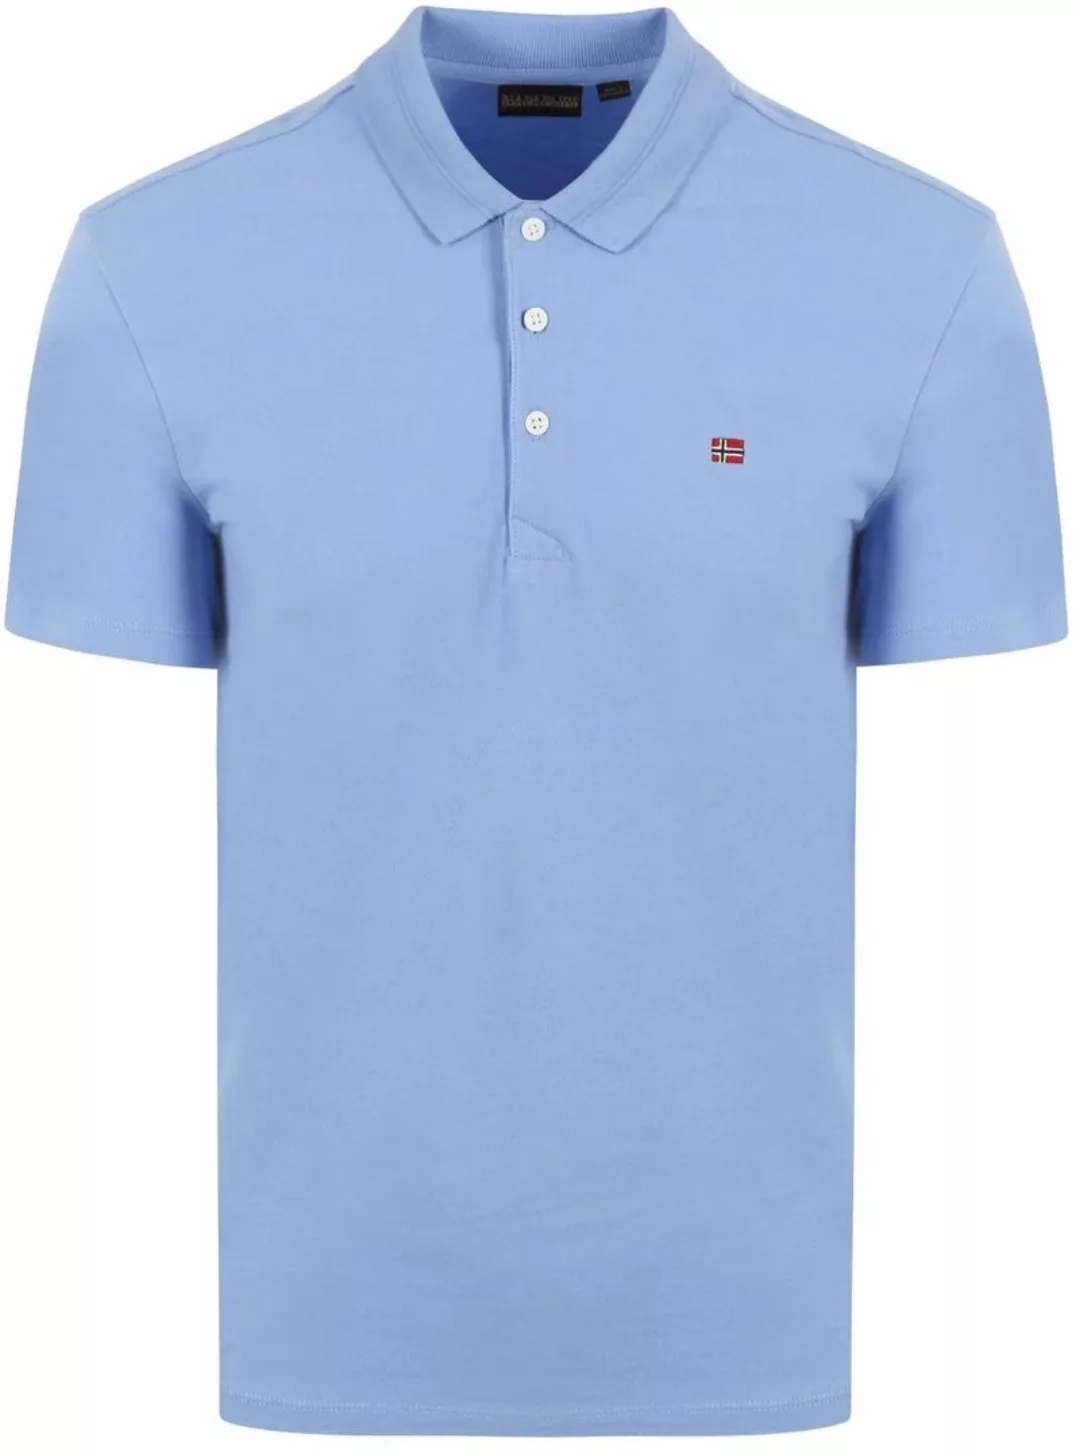 Napapijri Ealis Poloshirt Hellblau - Größe L günstig online kaufen